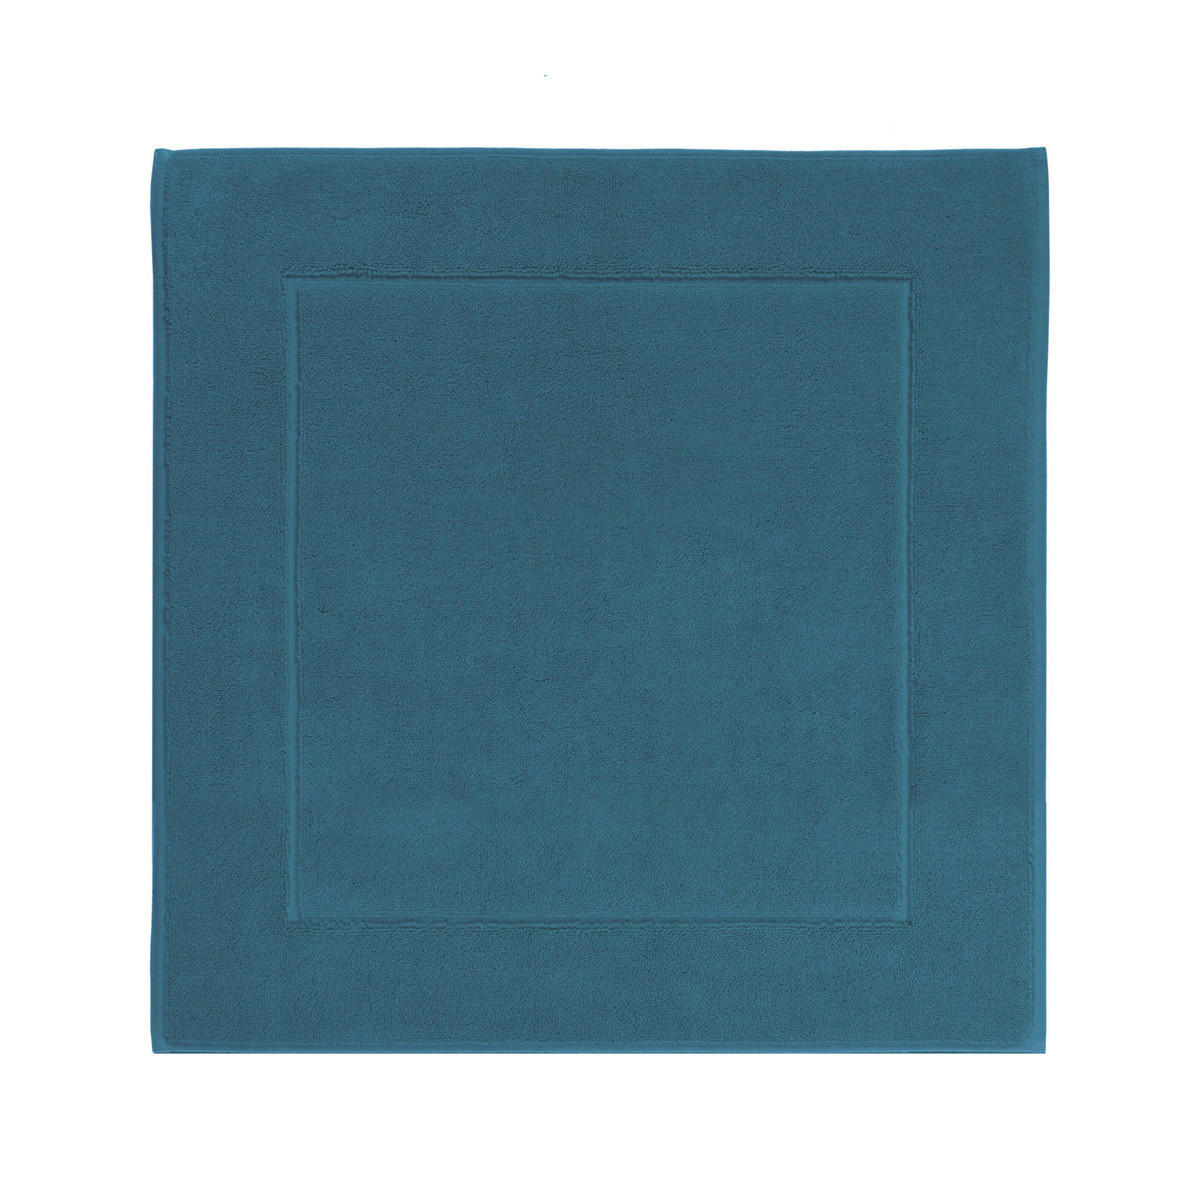 BADEMATTE London 60/60 cm  - Blau, Basics, Kunststoff/Textil (60/60cm) - Aquanova